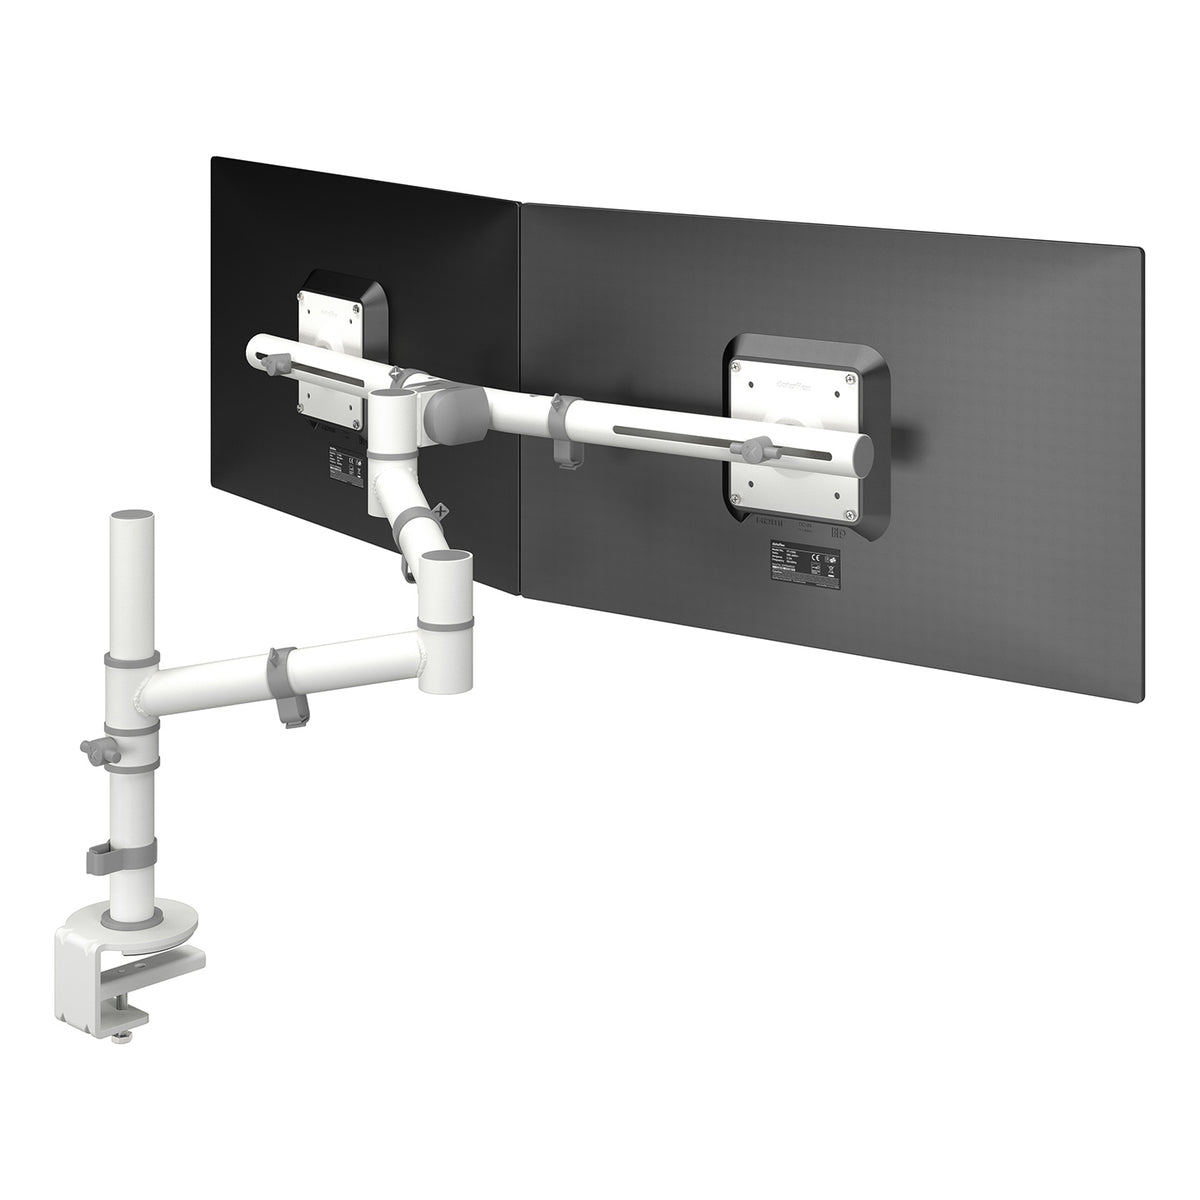 Viewgo monitor arm - desk